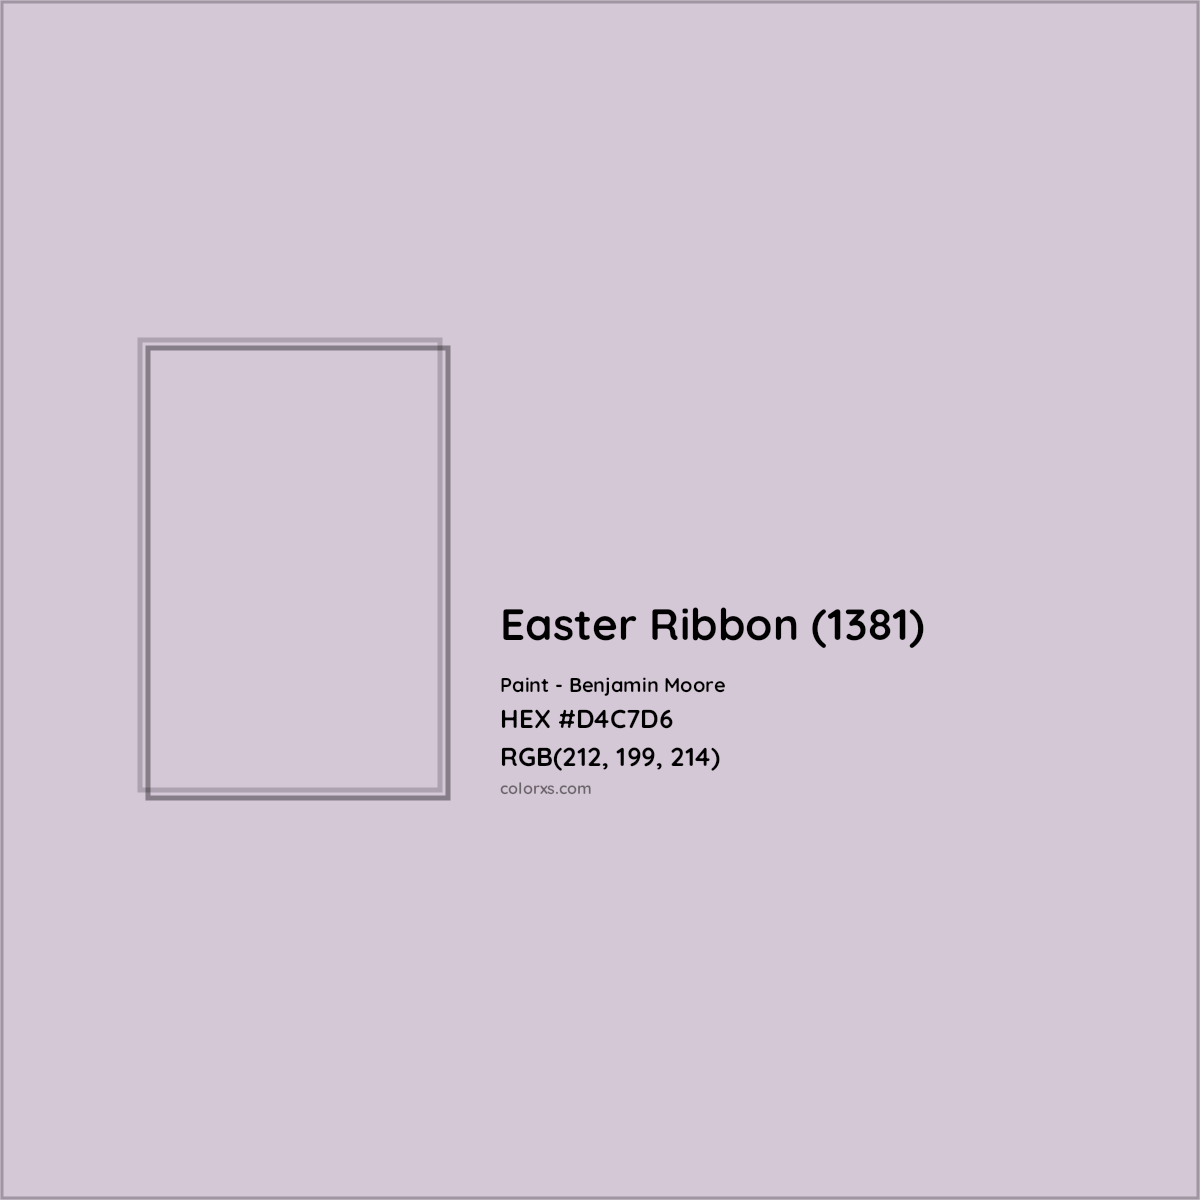 HEX #D4C7D6 Easter Ribbon (1381) Paint Benjamin Moore - Color Code